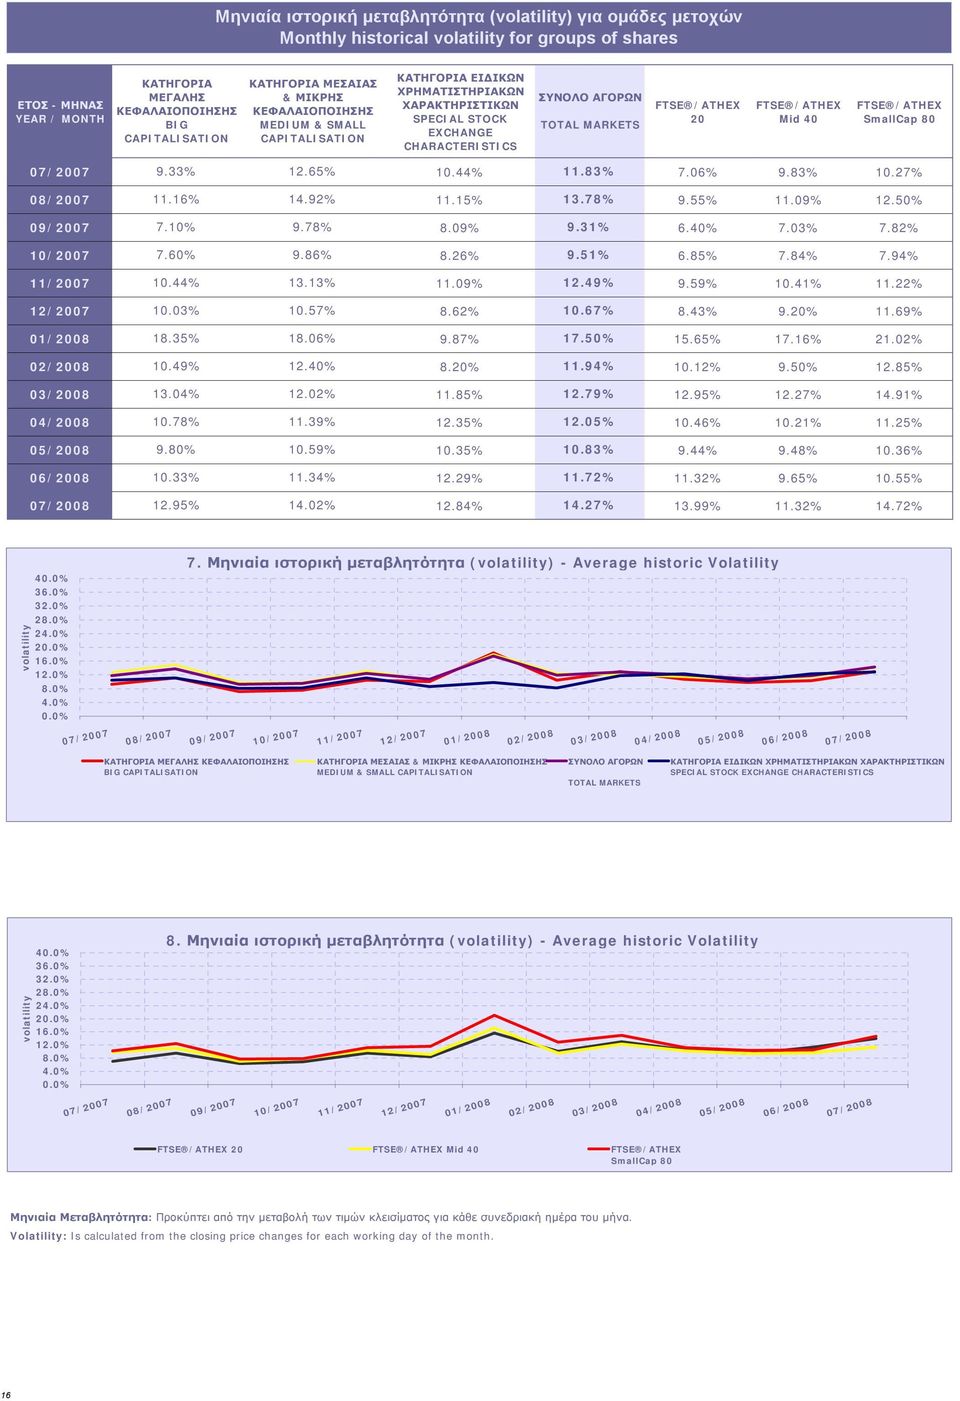 /ATHEX 20 FTSE /ATHEX Mid 40 FTSE /ATHEX SmallCap 80 07/2007 9.33% 12.65% 10.44% 11.83% 7.06% 9.83% 10.27% 08/2007 11.16% 14.92% 11.15% 13.78% 9.55% 11.09% 12.50% 09/2007 7.10% 9.78% 8.09% 9.31% 6.